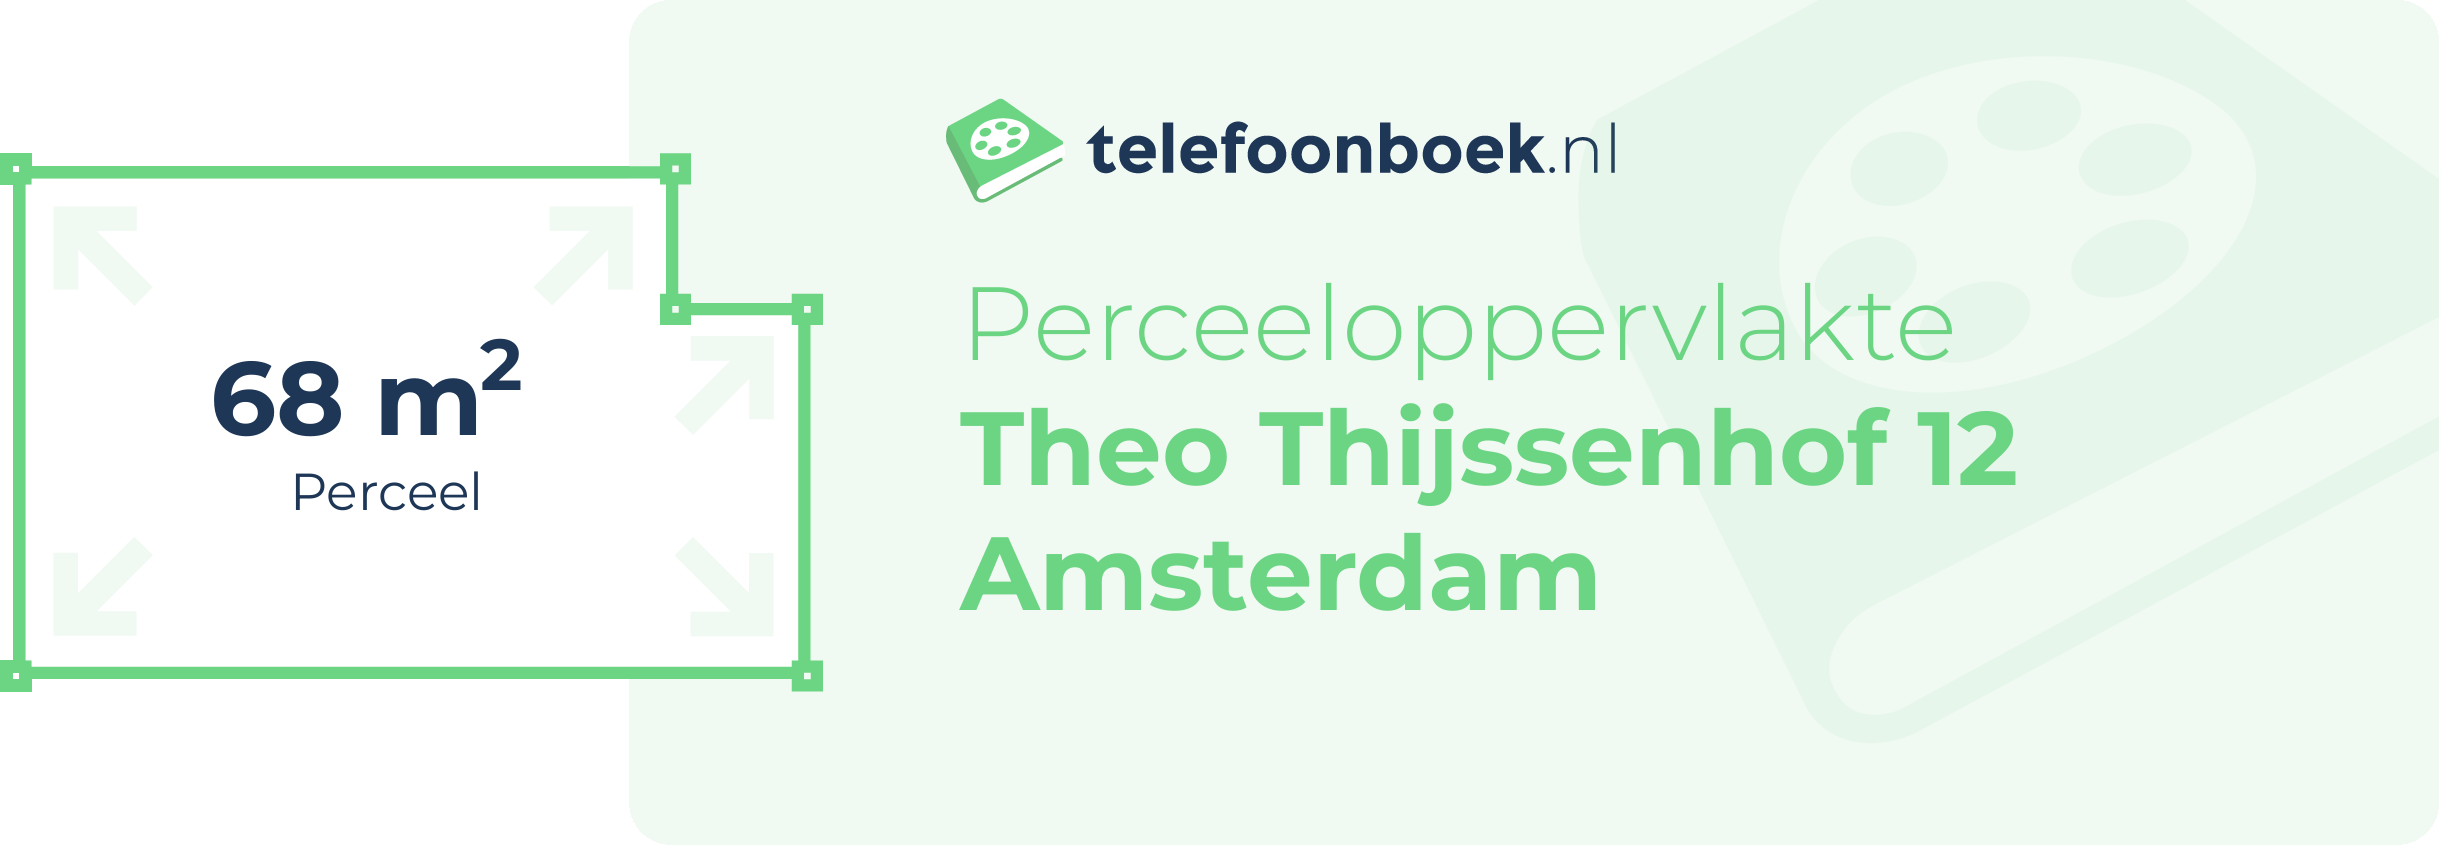 Perceeloppervlakte Theo Thijssenhof 12 Amsterdam